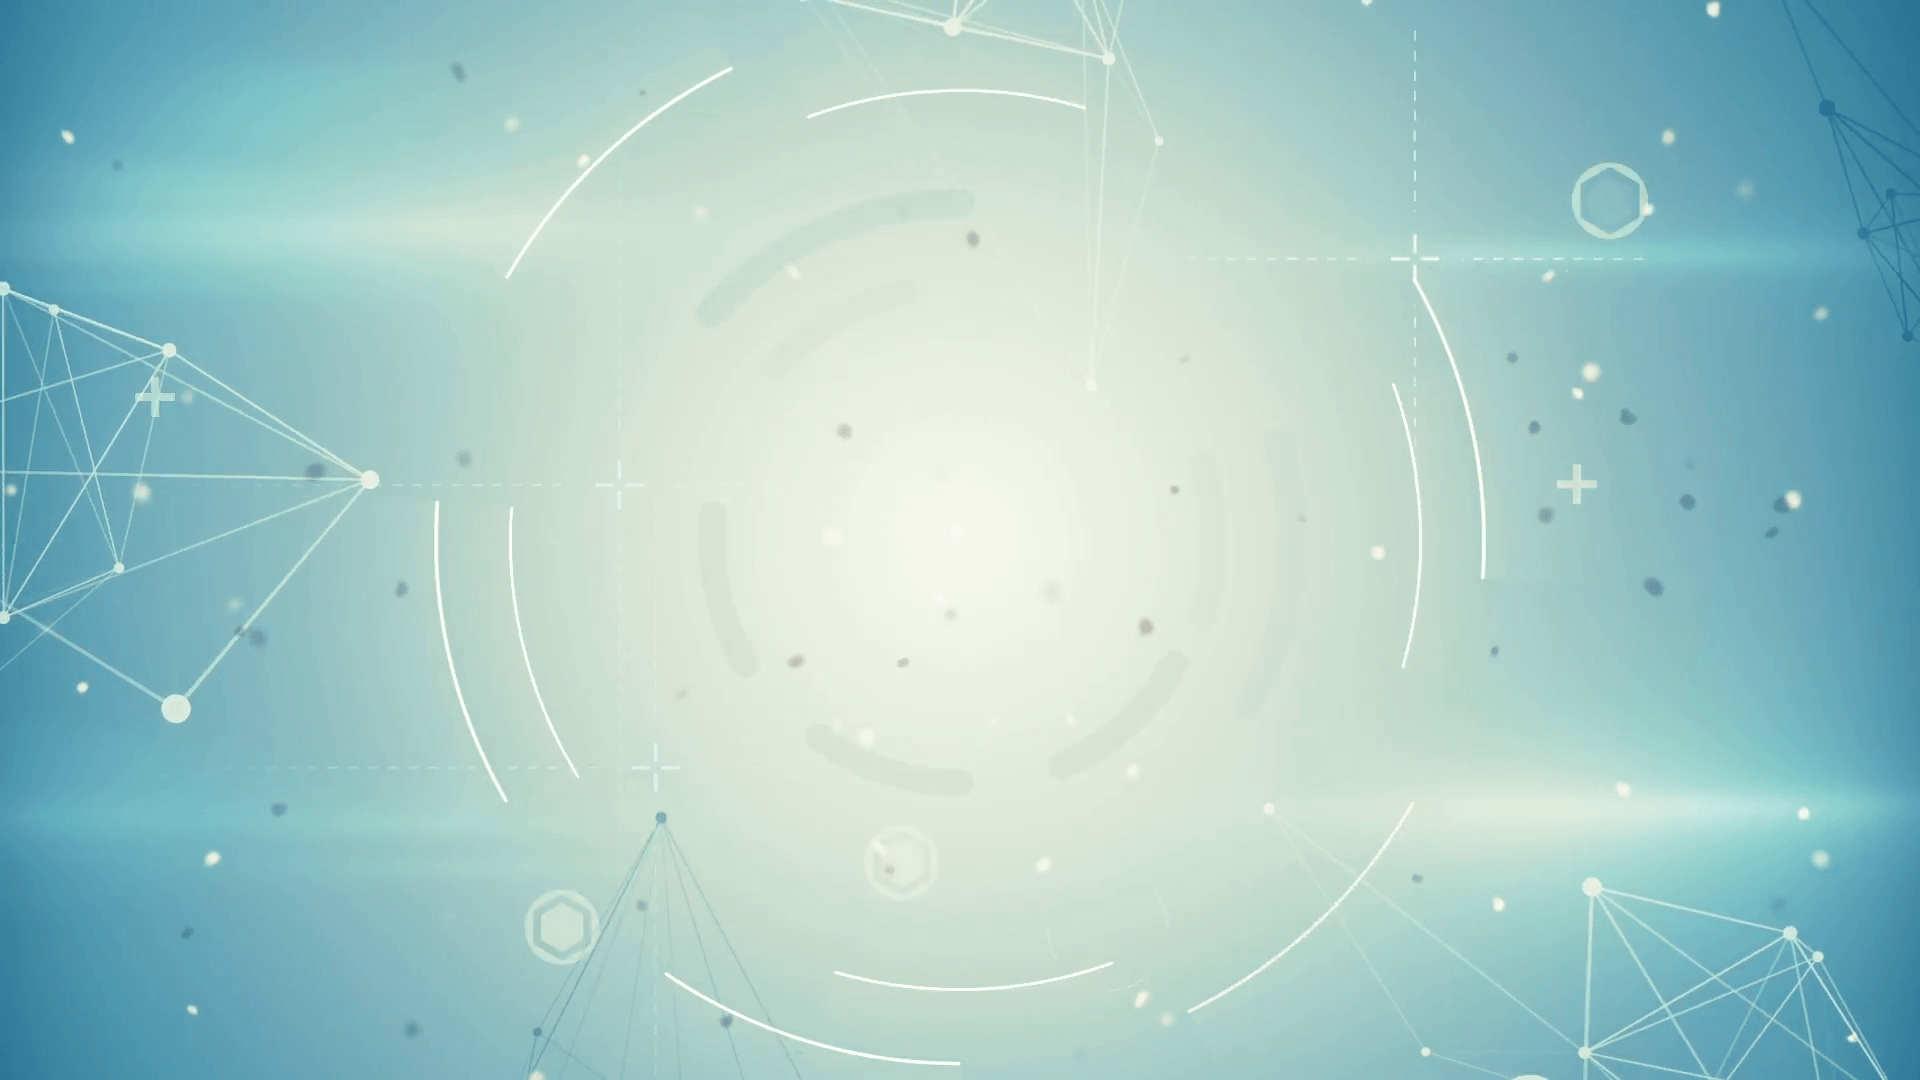 Digital techno wallpaper glowing abstract Vector Image